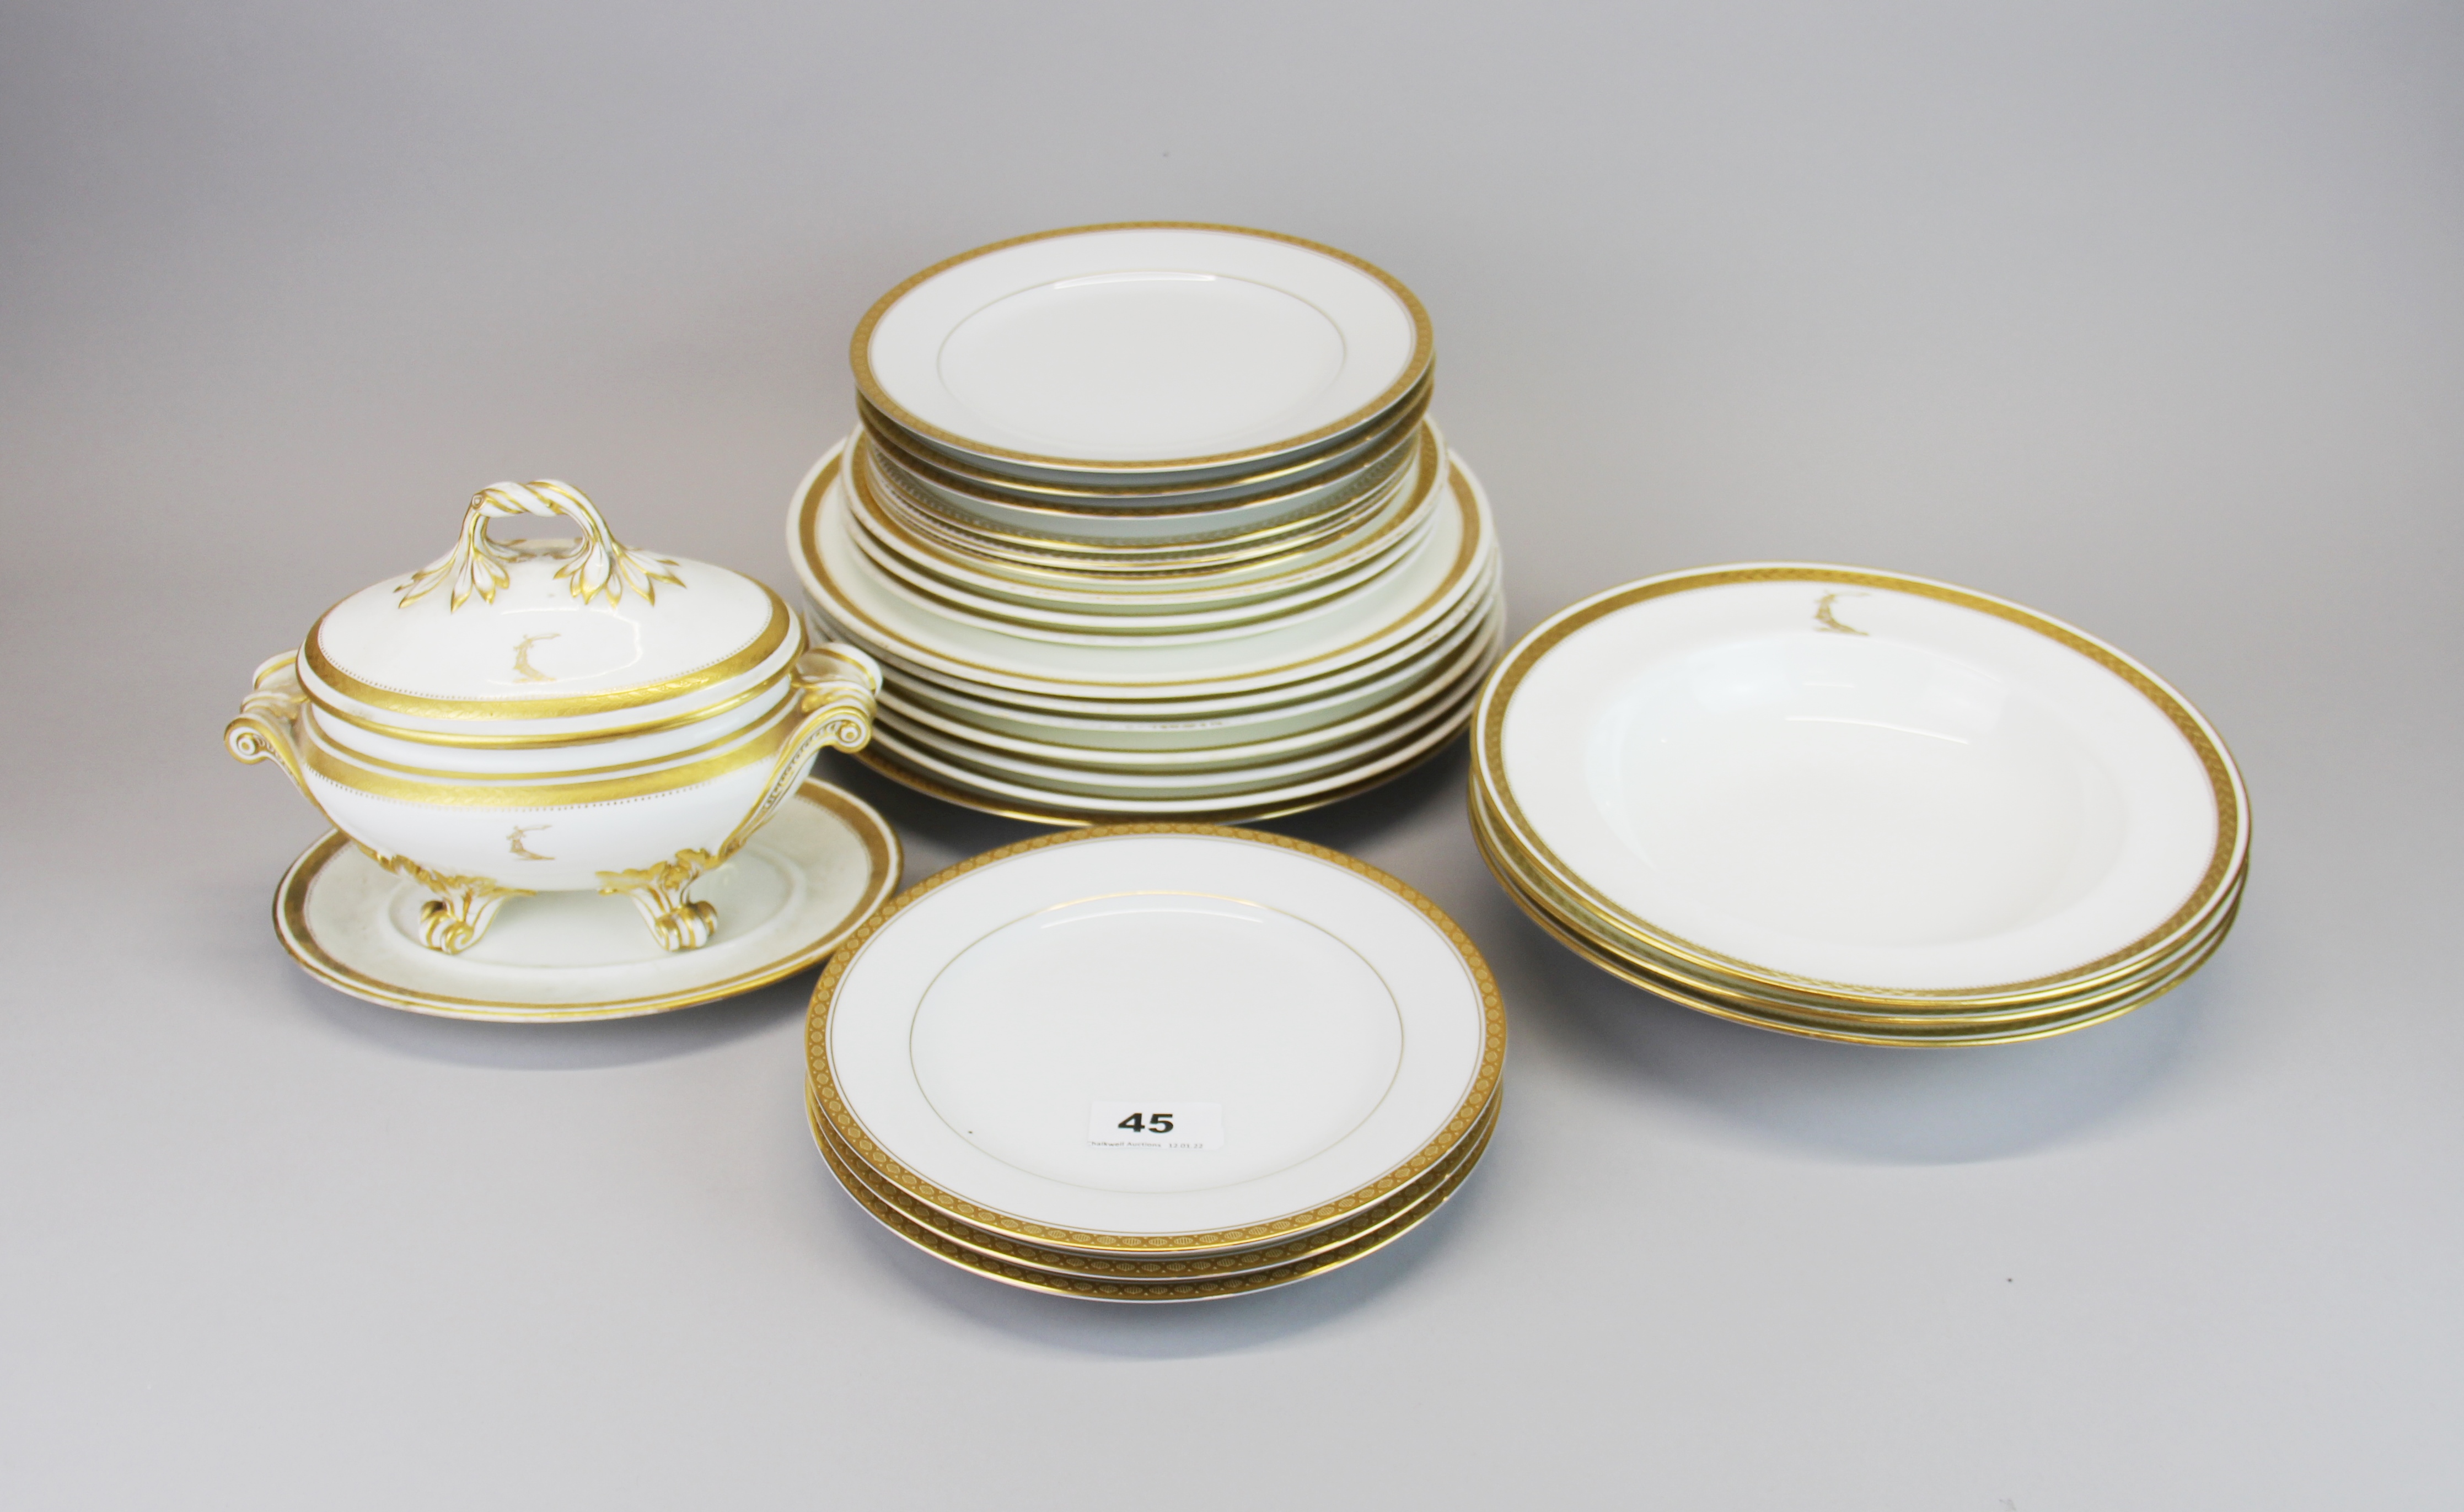 A quantity of John Millar & Co Edinburgh porcelain dinner ware items including small tureen, cover